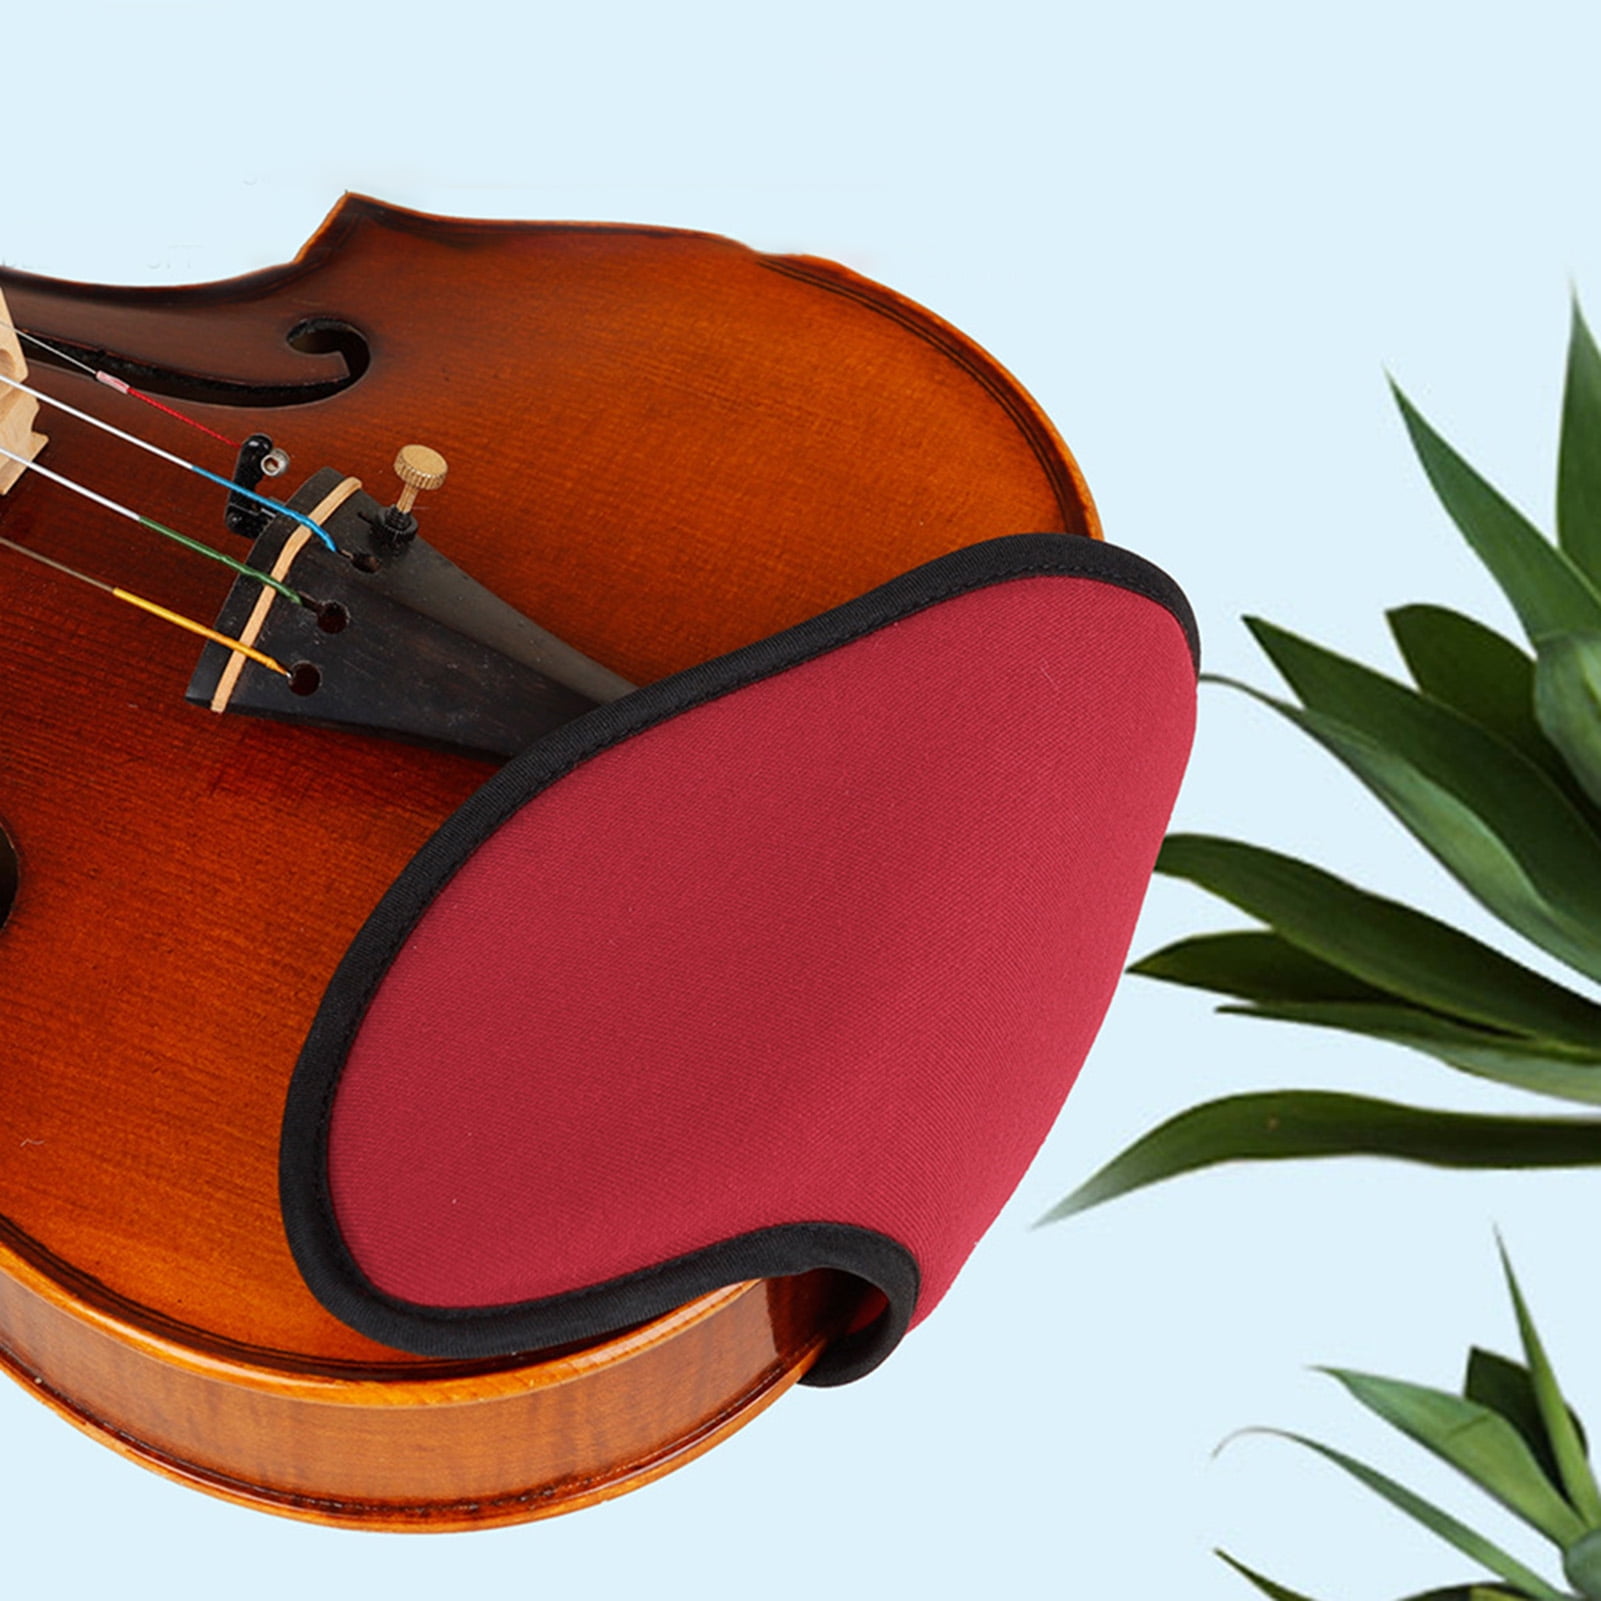 BLLNDX Violin Chin Rest Pad Black Violin Shoulder Rest Flannelette Pad Cover Protector for 3/4 4/4 Violin Accessories 